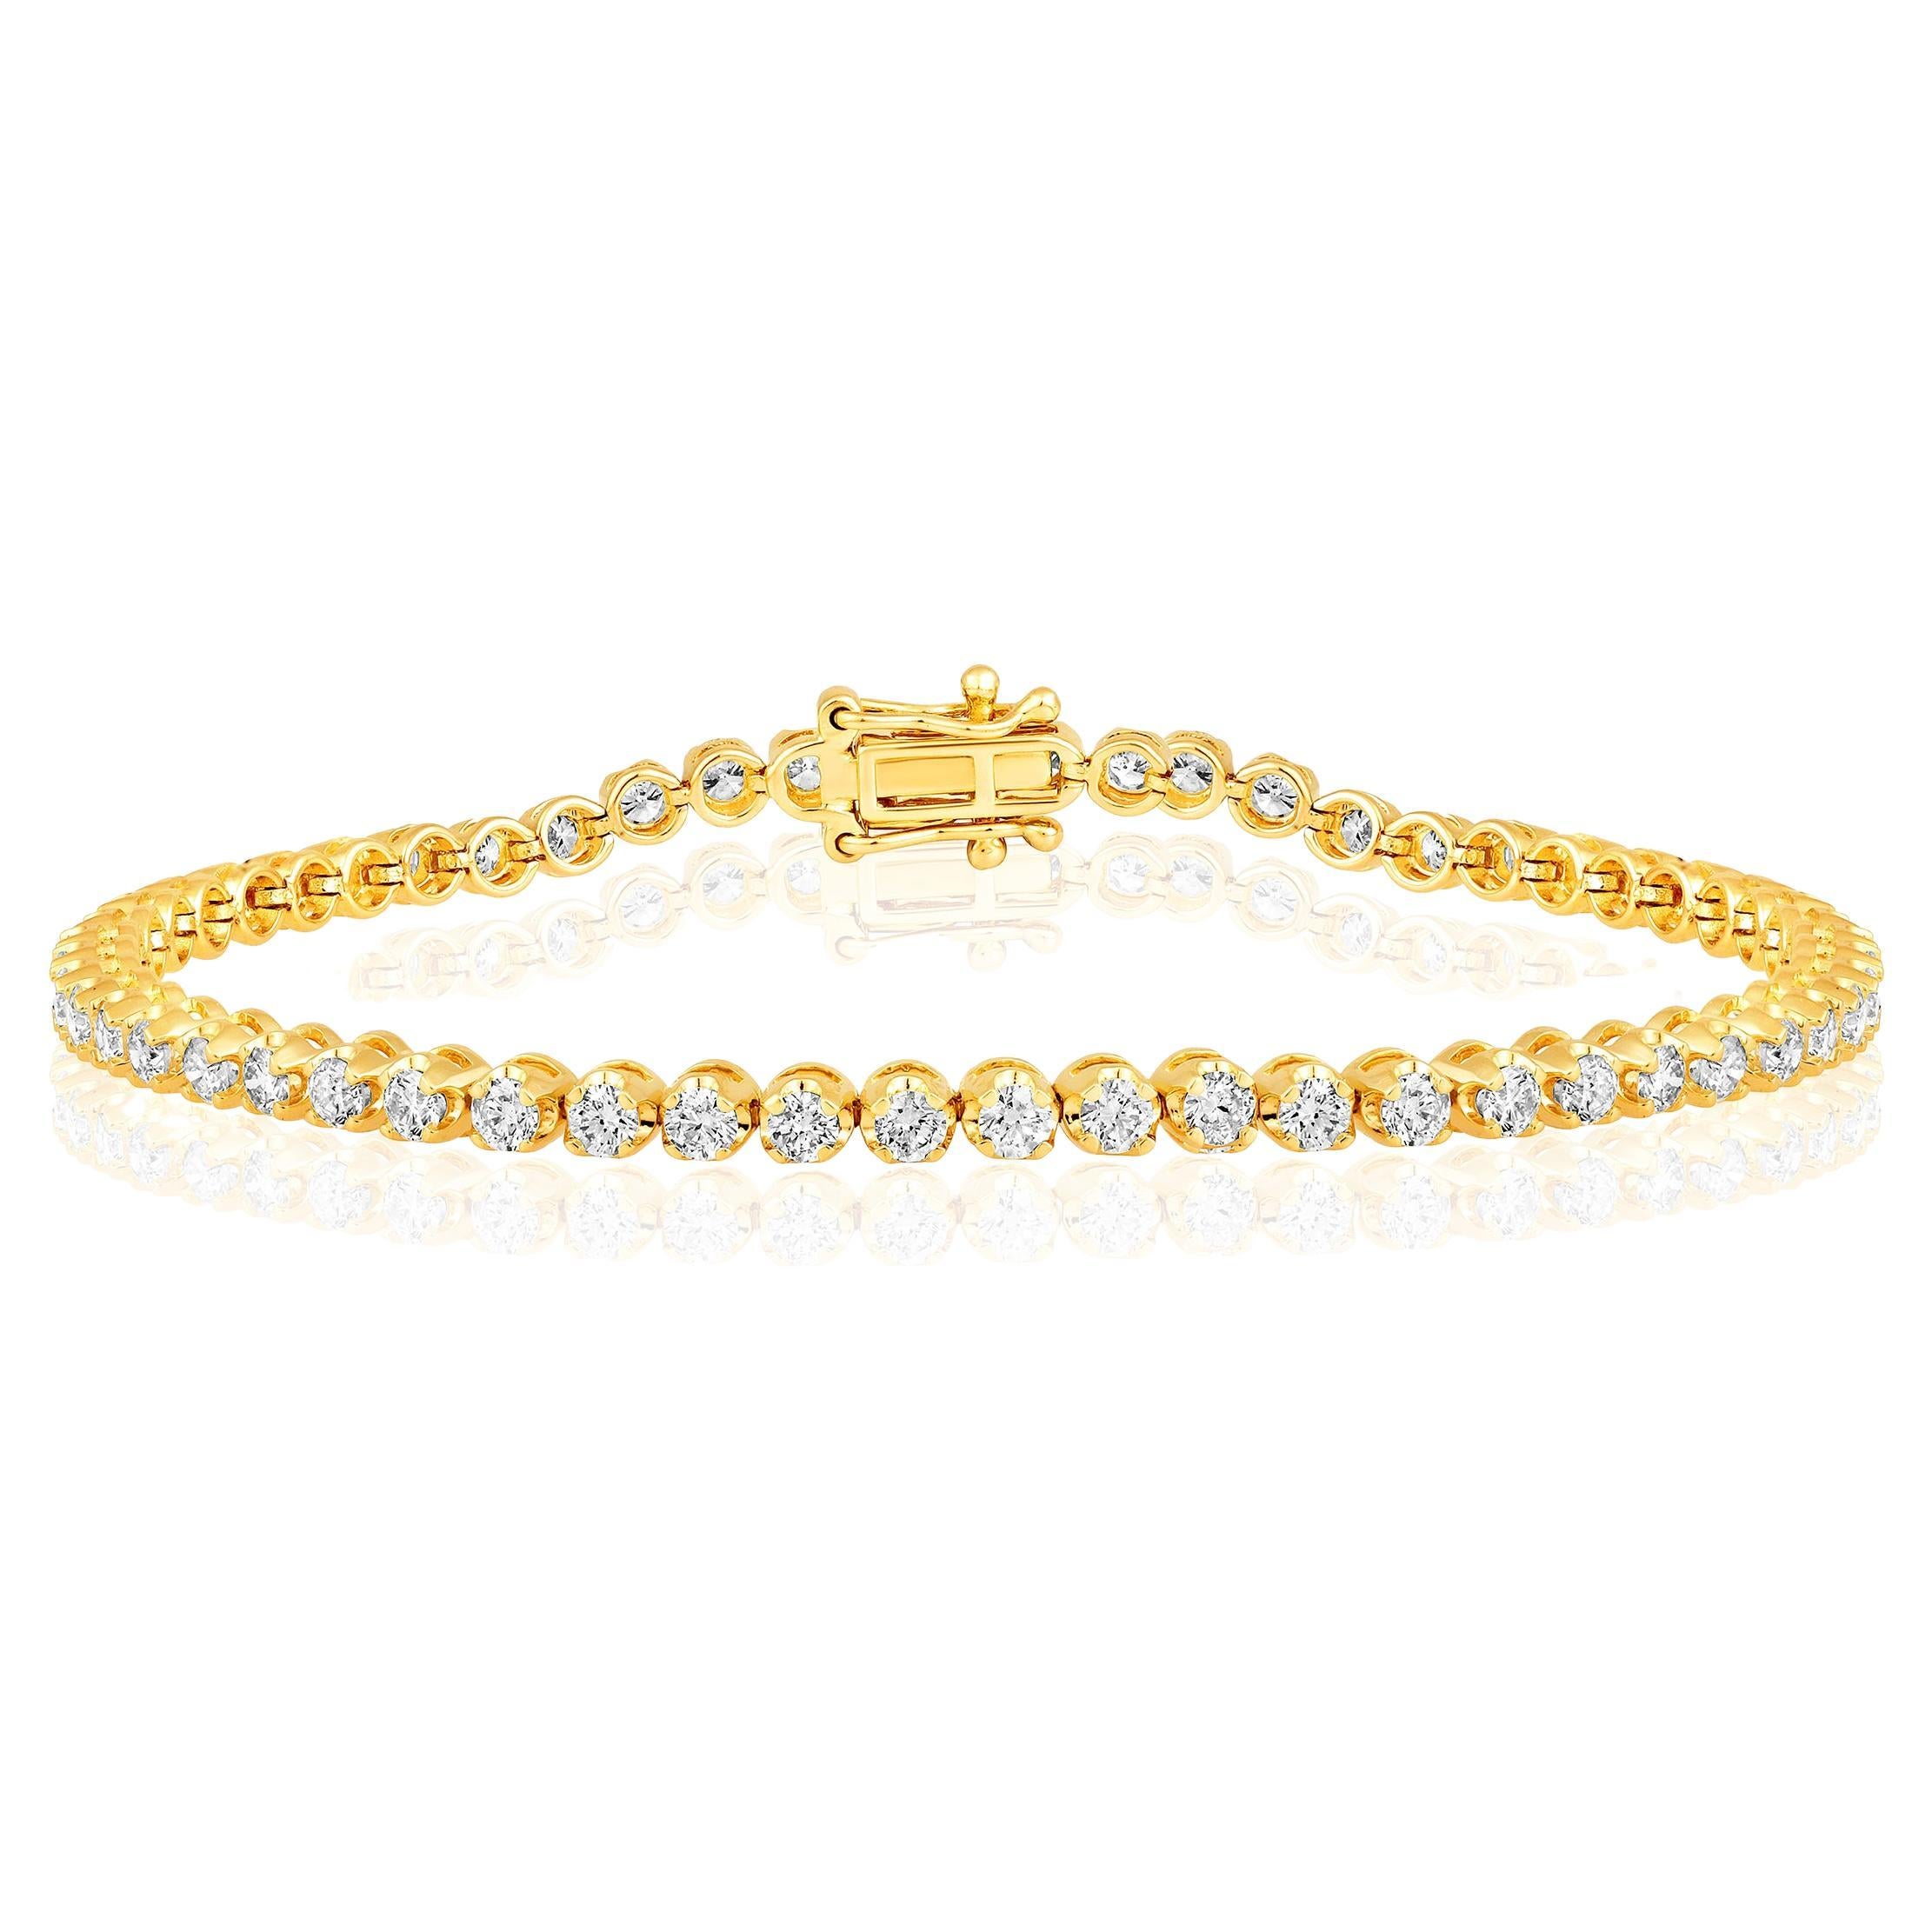 Certified 14k Gold 3 Carat Natural Diamond Tiger Prong Tennis Wedding Bracelet For Sale